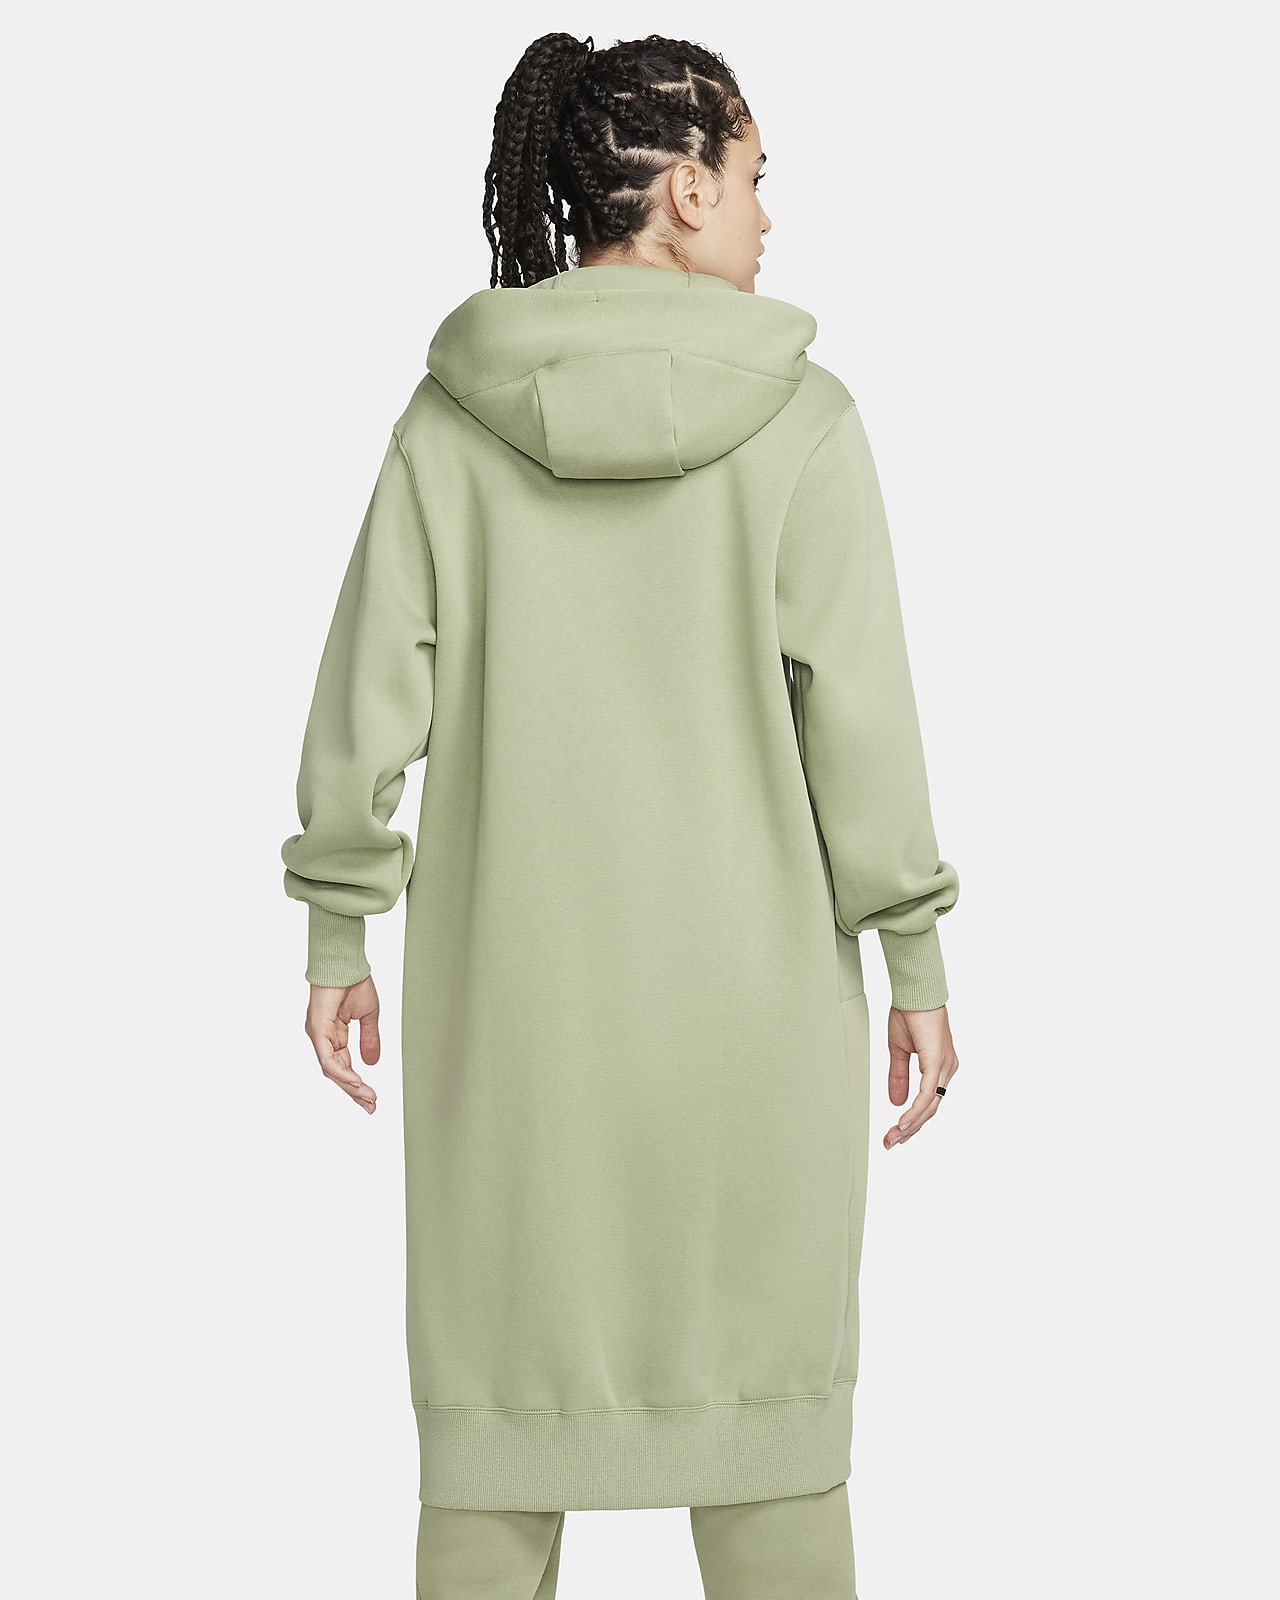 The Oversized Fleece Dress - Women's